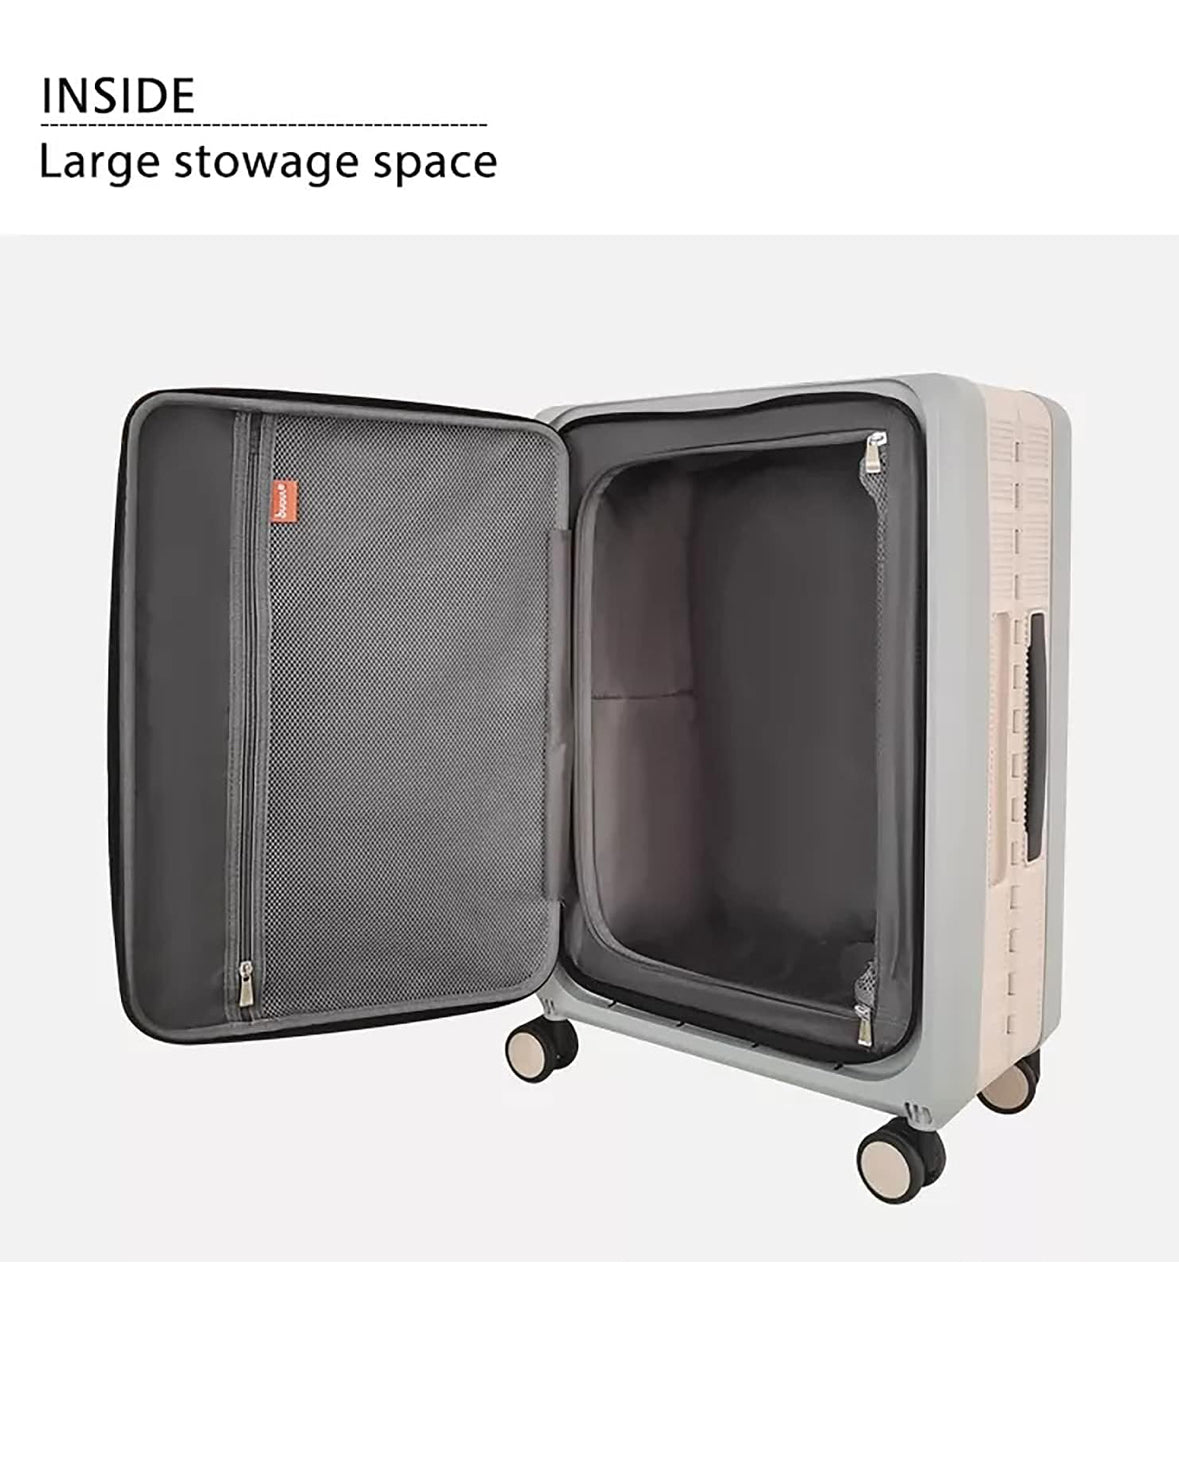 Bubule foldable compact luggage